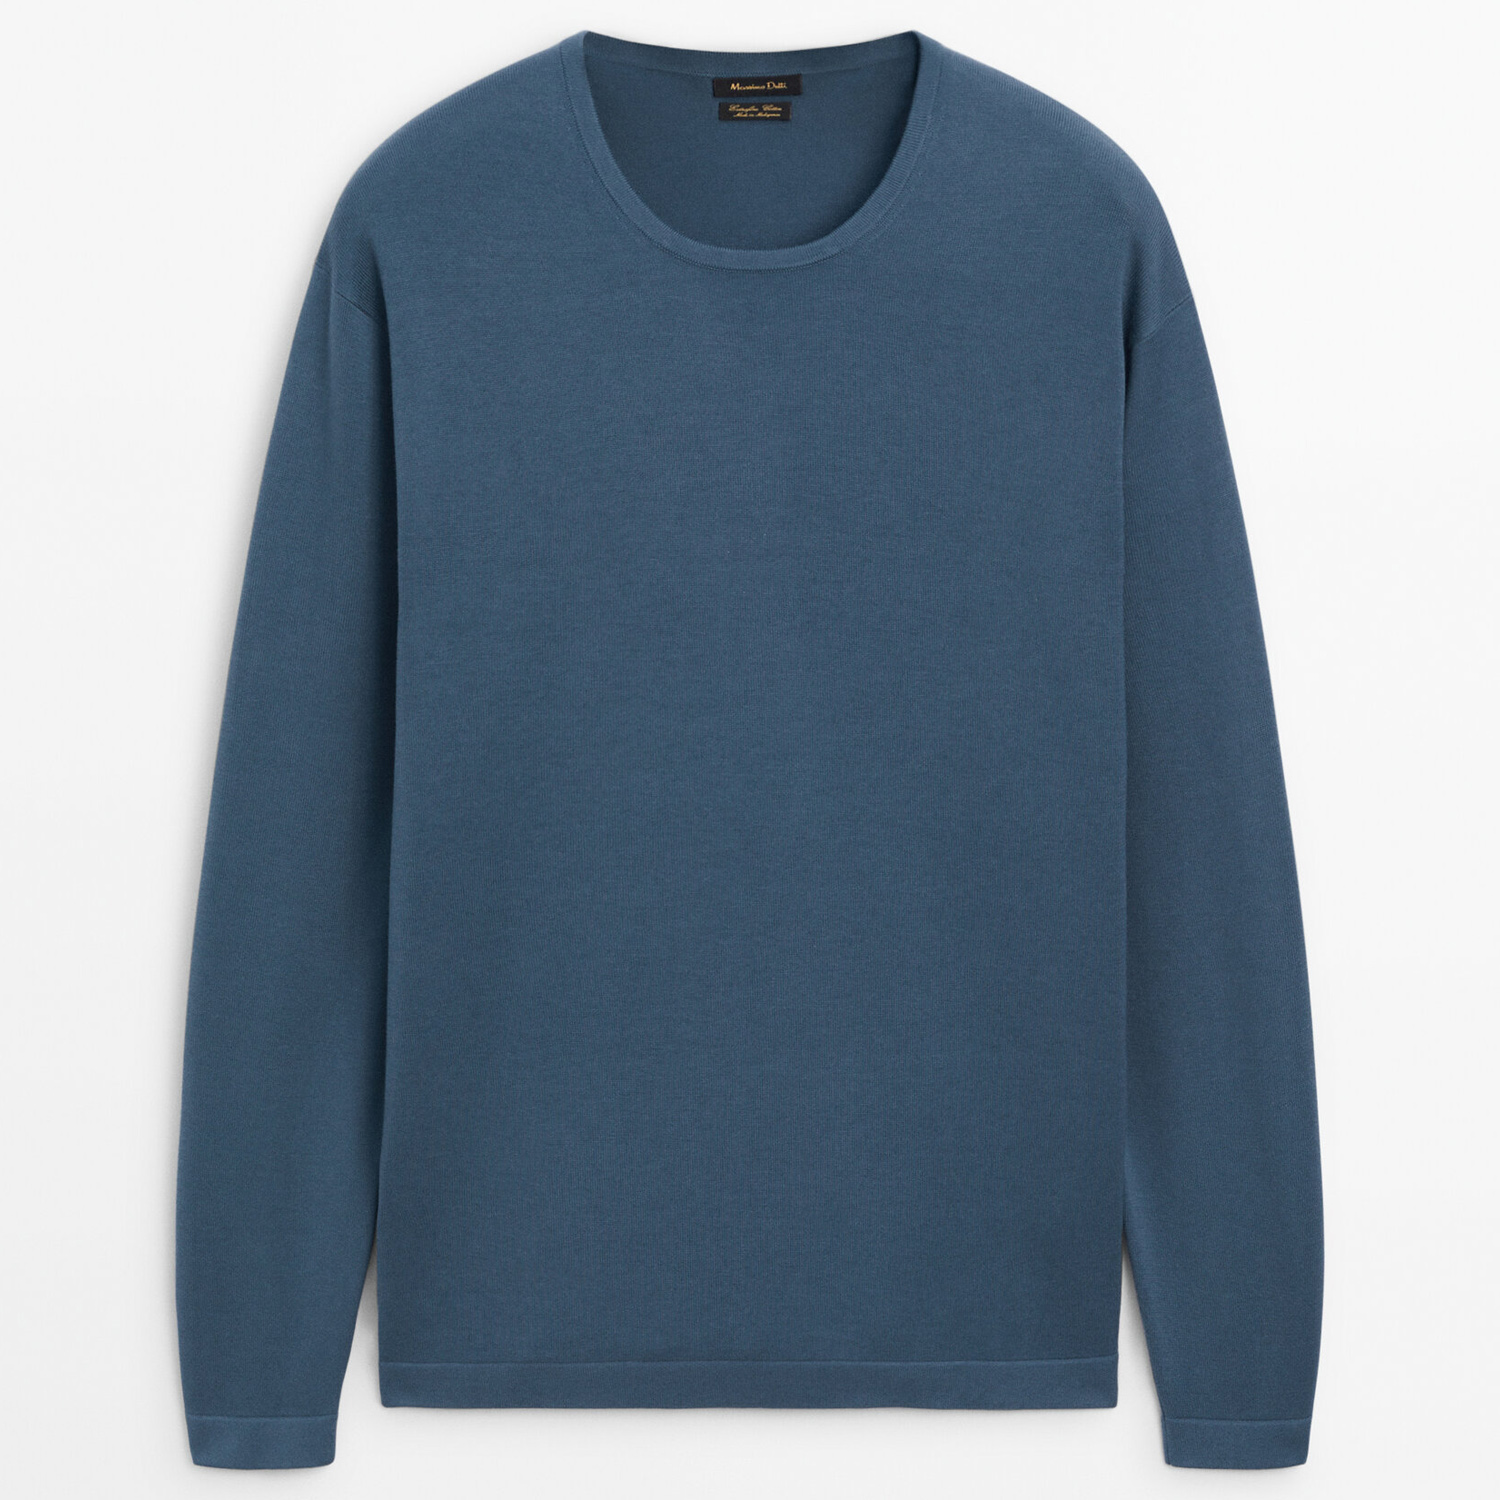 Свитер Massimo Dutti Crew Neck Knit, синий свитер massimo dutti crew neck knit limited edition кремовый